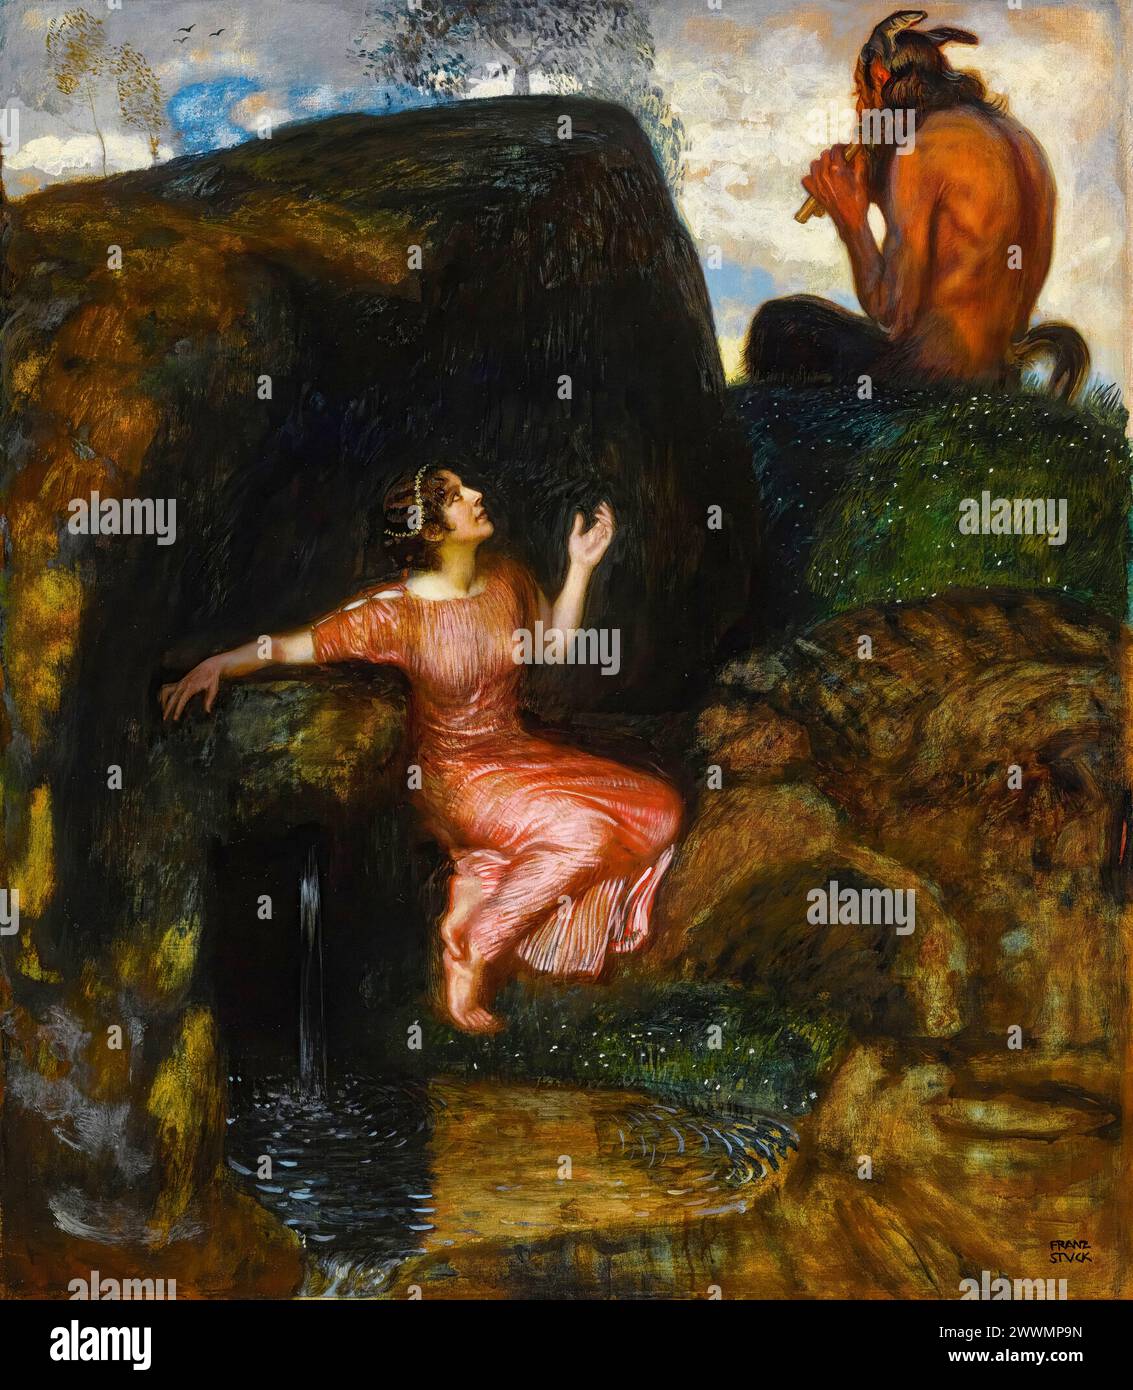 Franz von Stuck painting, An der Quelle (Lauschende Nymphe), (At the Source, Listening Nymph), oil on panel, circa 1901 Stock Photo